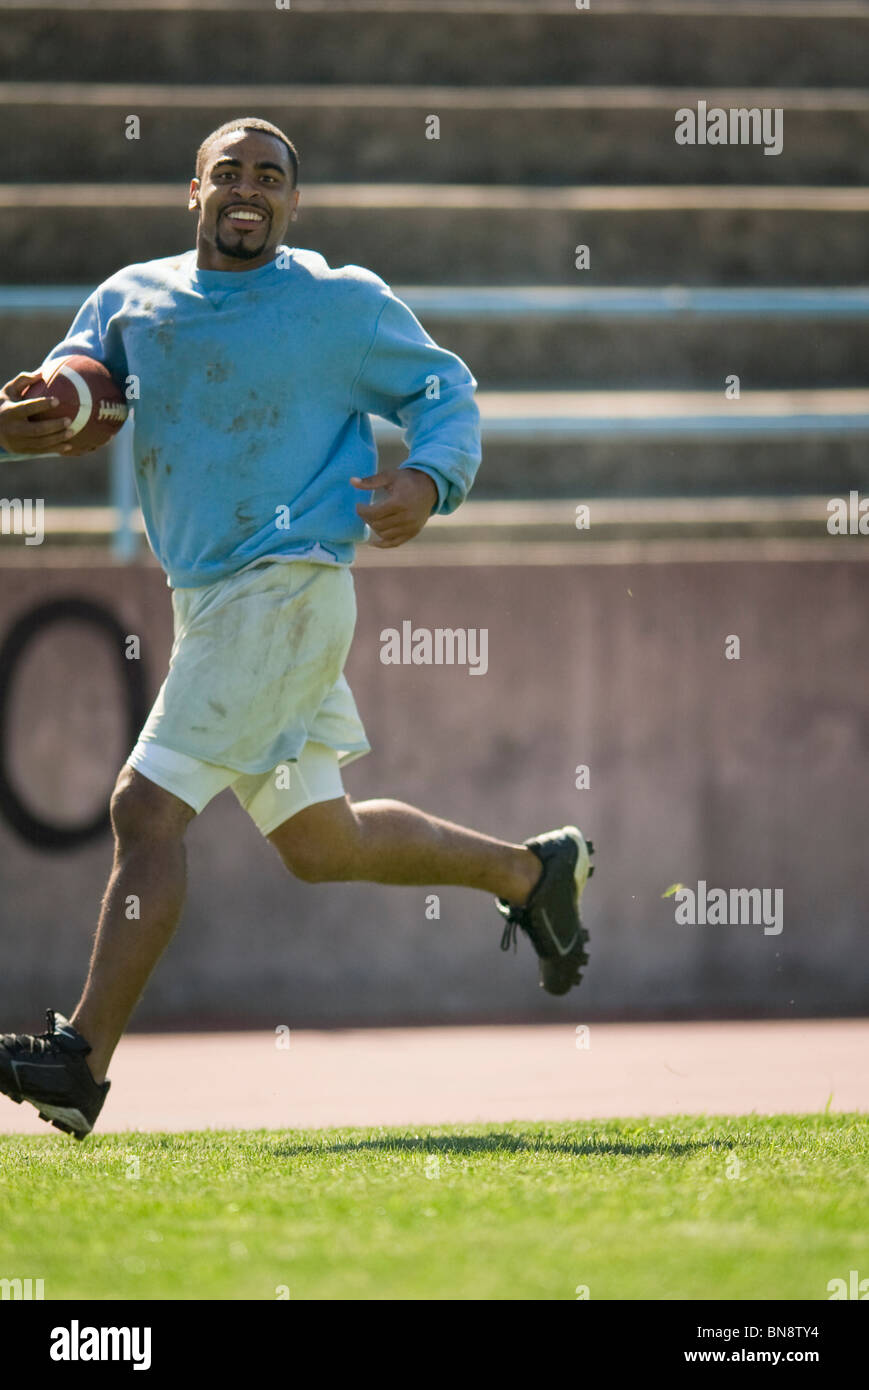 Man running with football Stock Photo